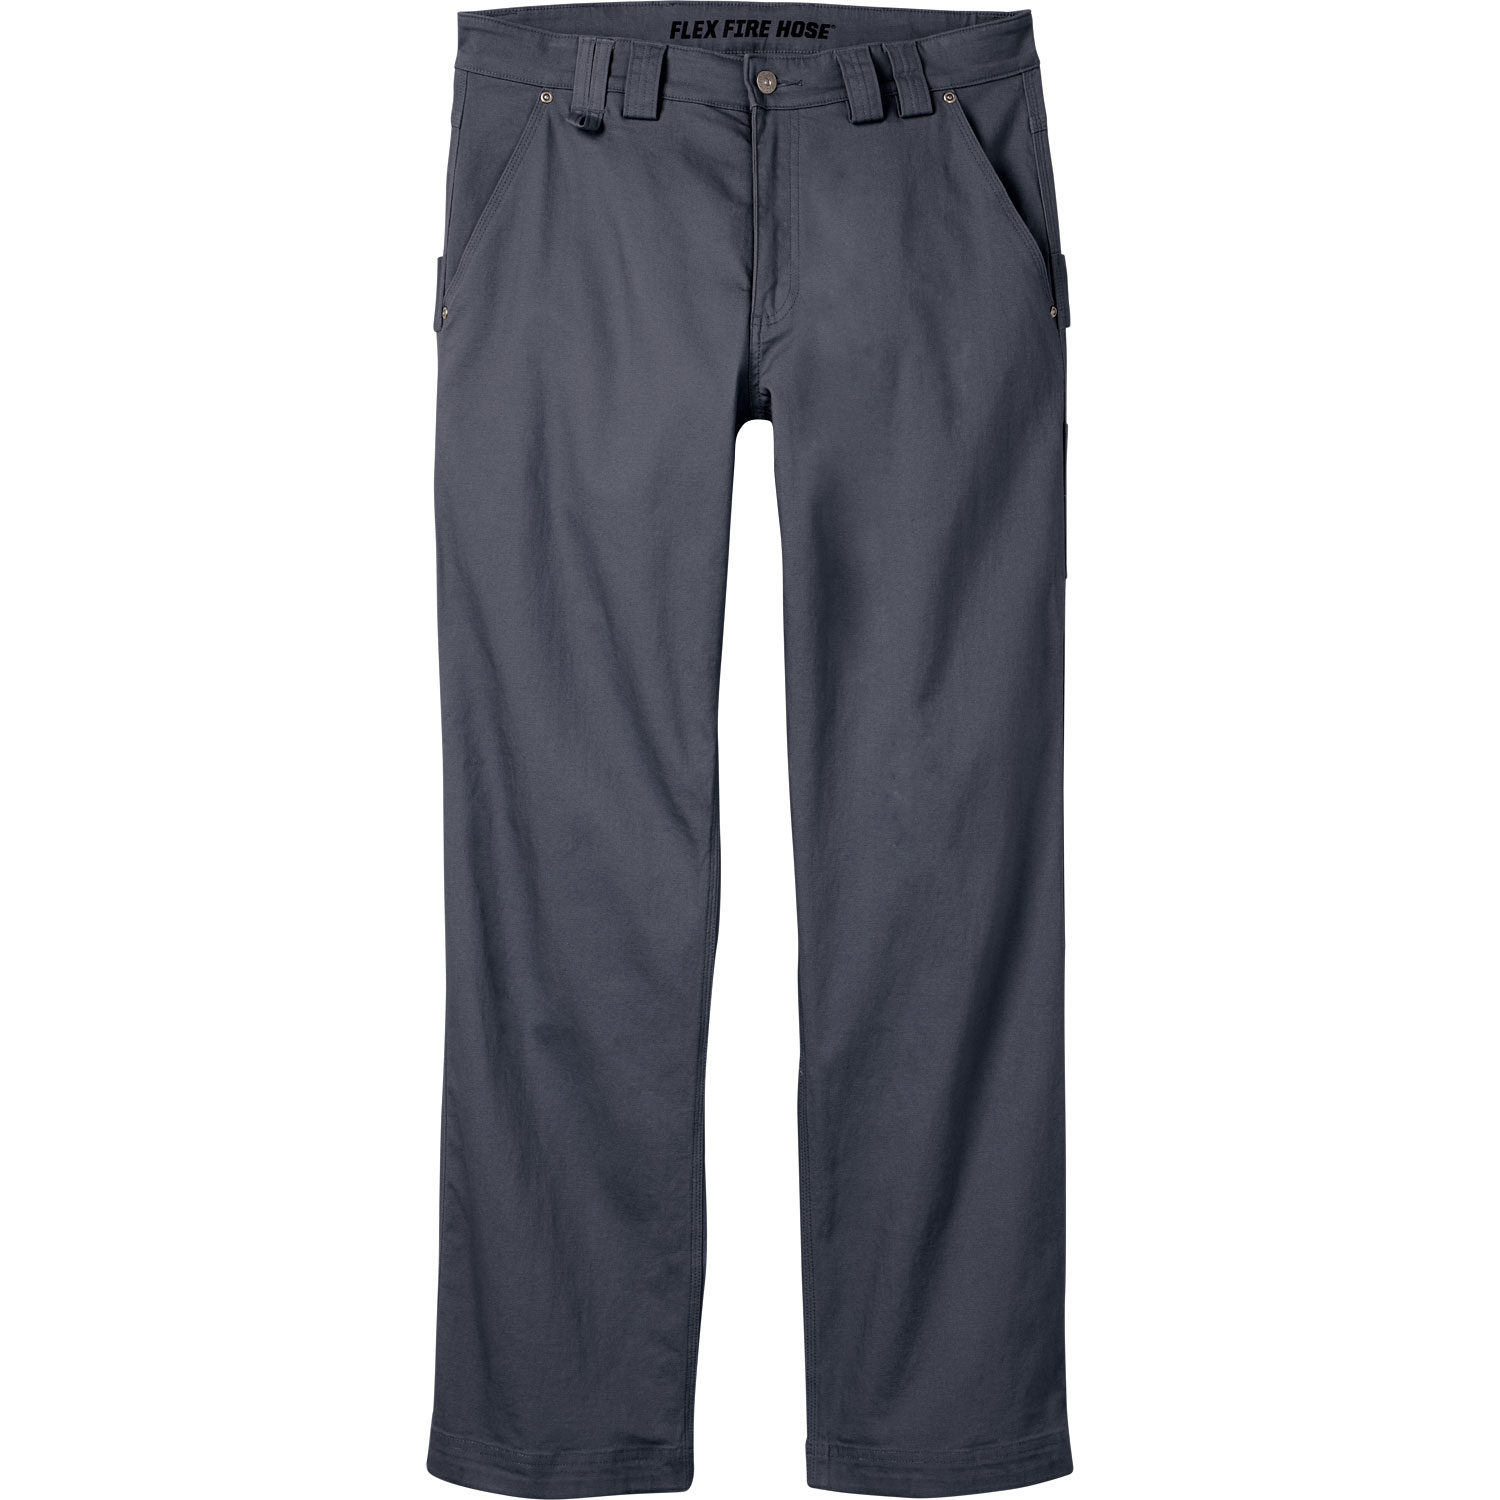 Men's DuluthFlex Fire Hose Relaxed Fit Carpenter Pants | Duluth Trading ...